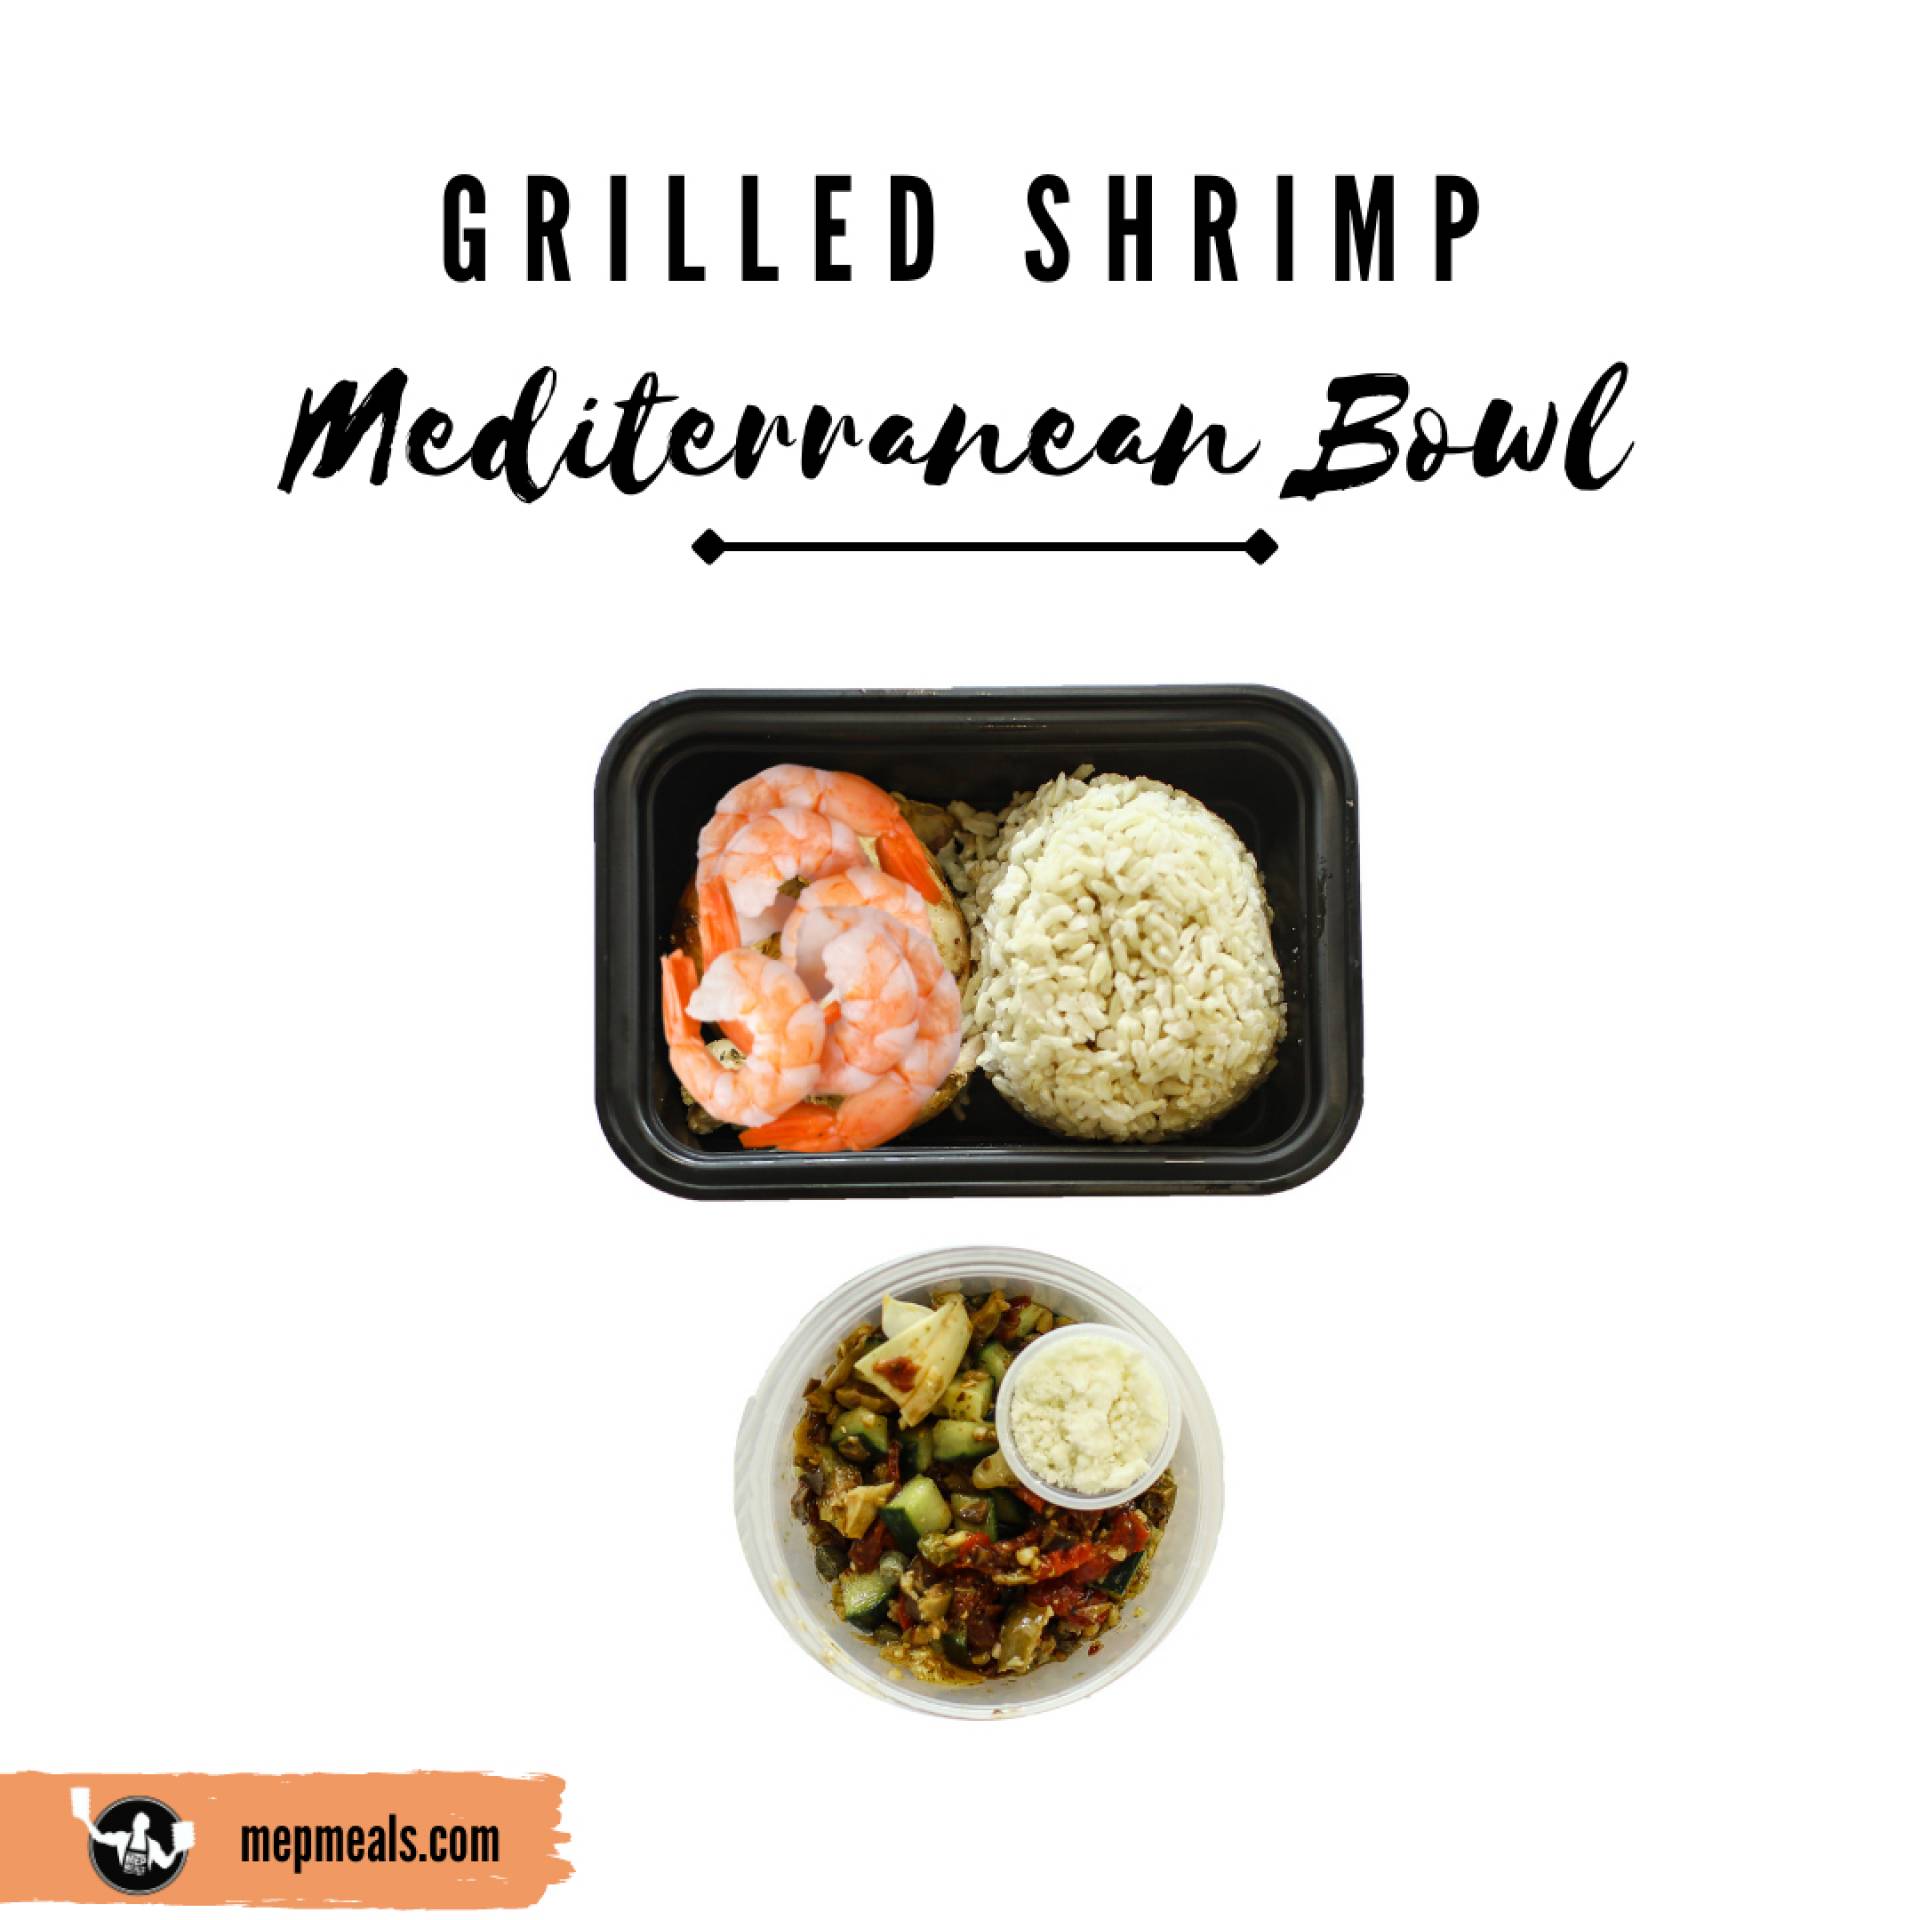 Shrimp Mediterranean Bowl (One Size)